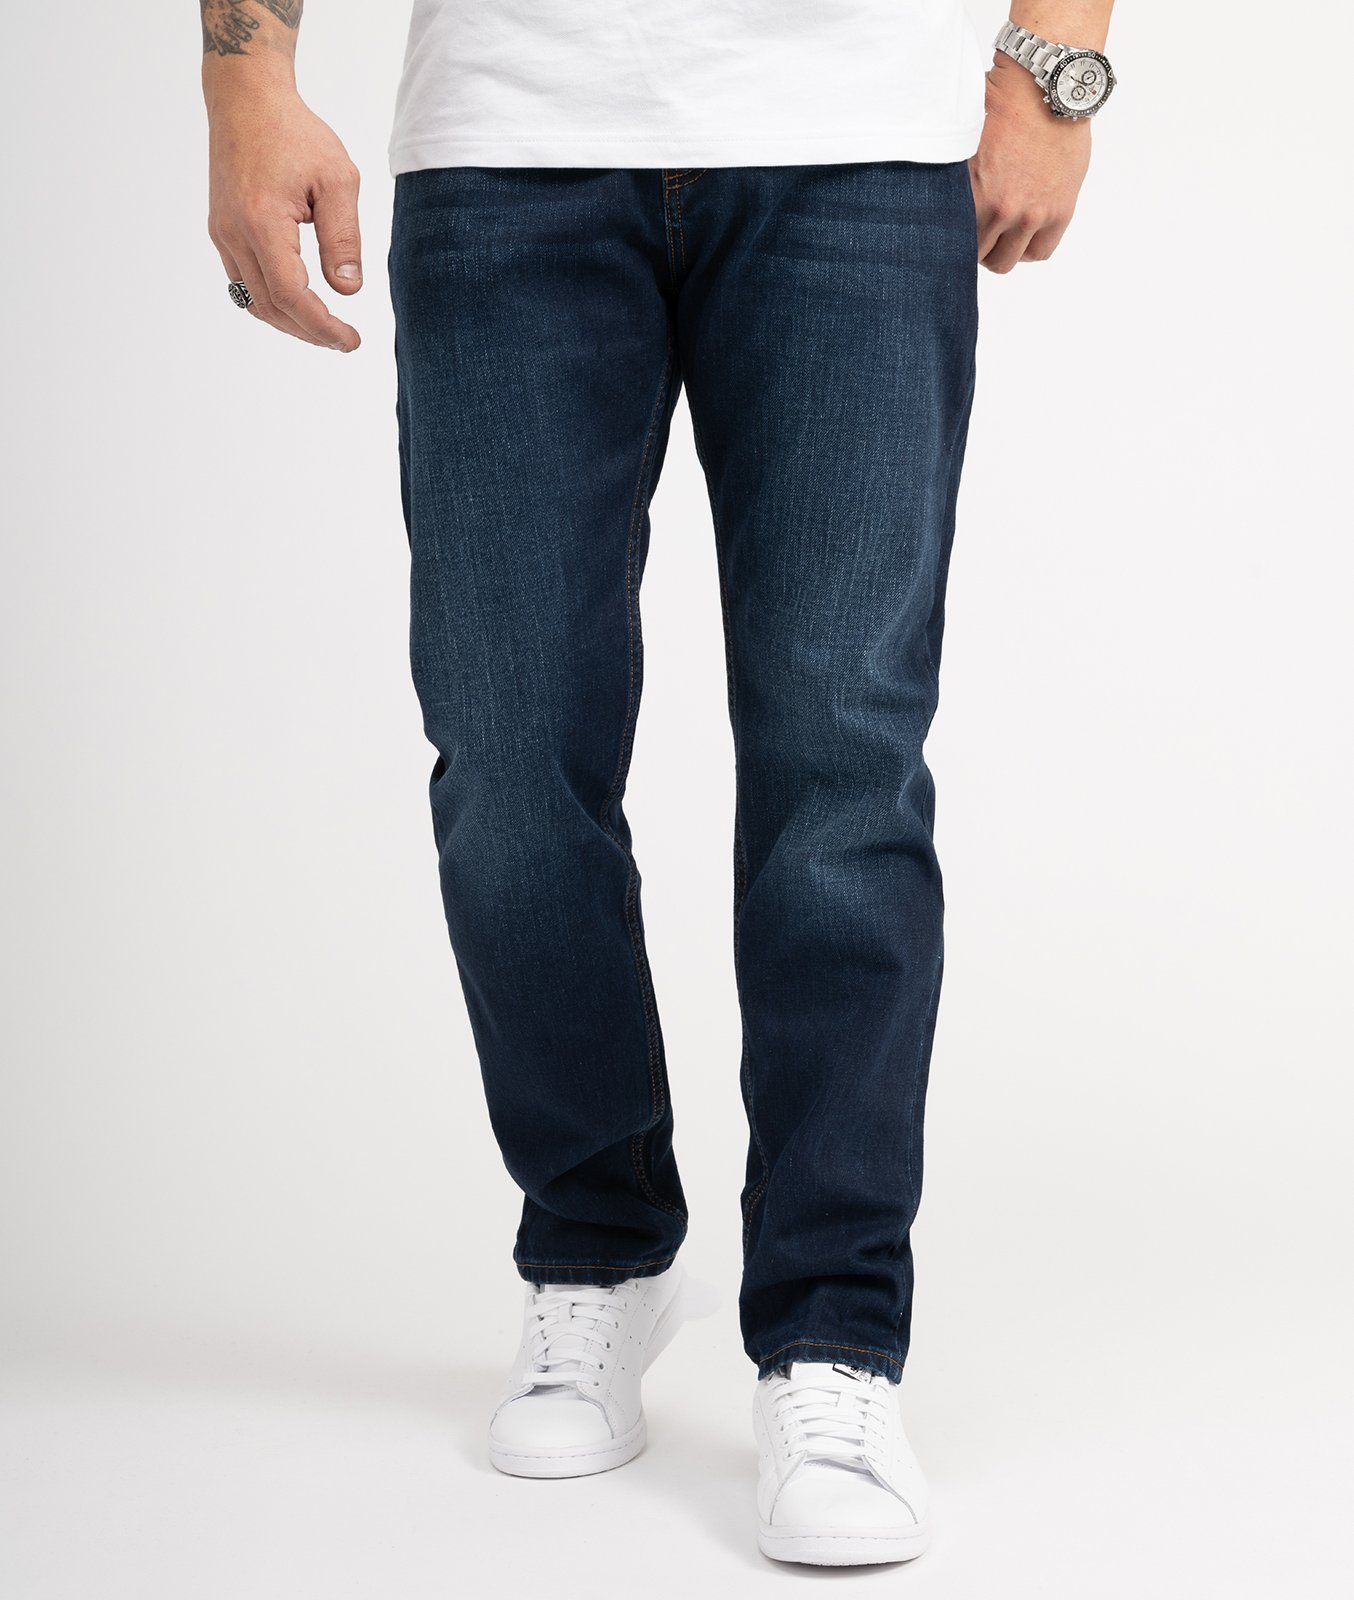 Indumentum Straight-Jeans Comfort Jeans IC-700 Herren Fit